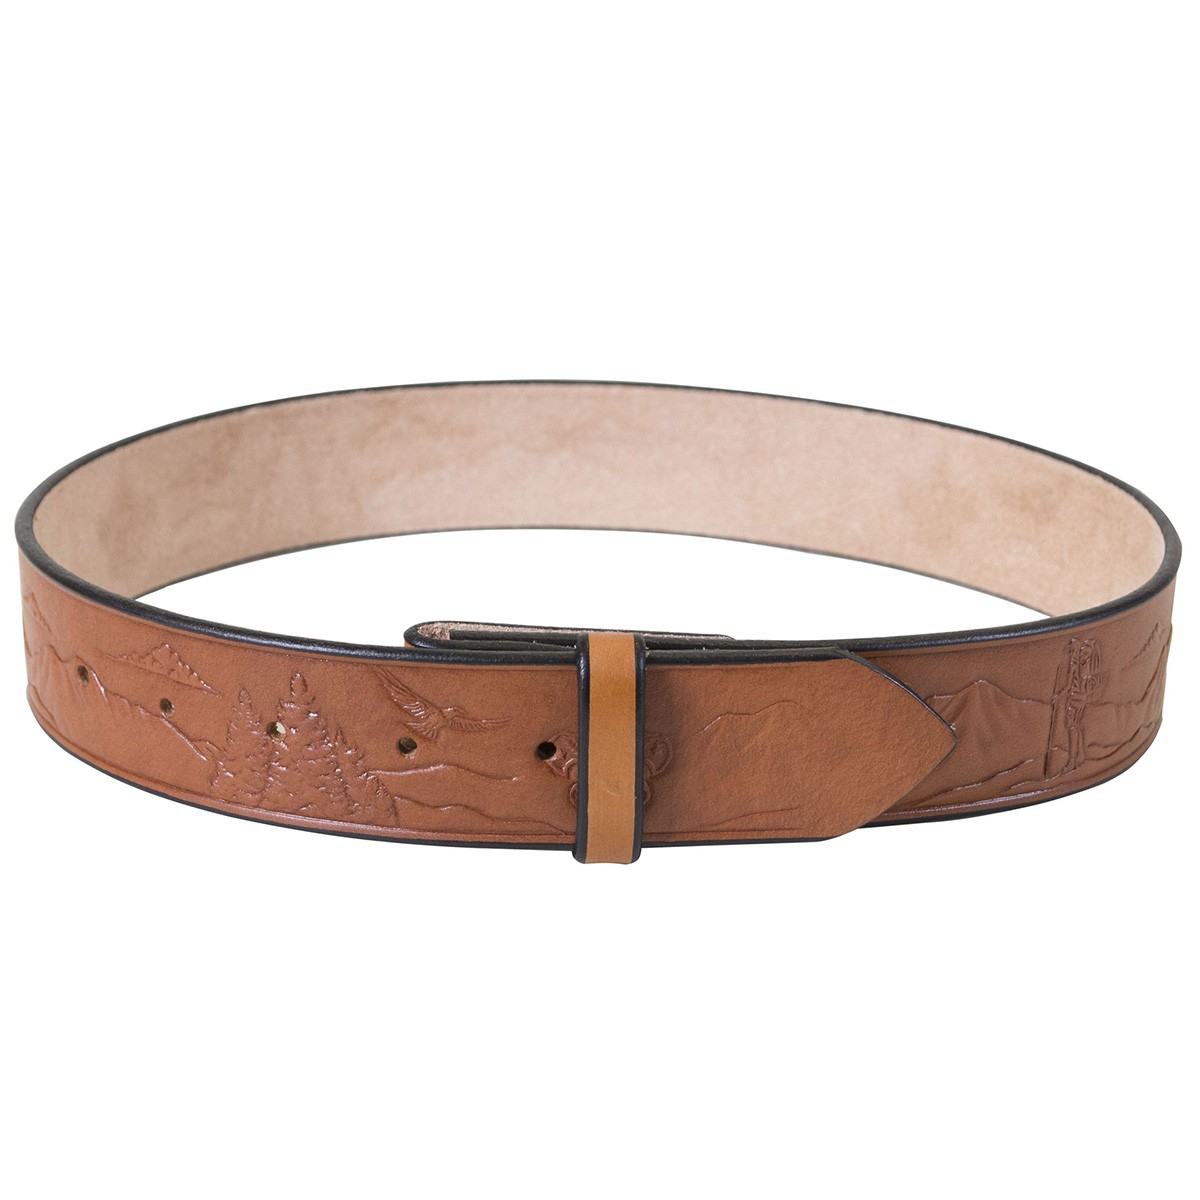 leather belt monogram